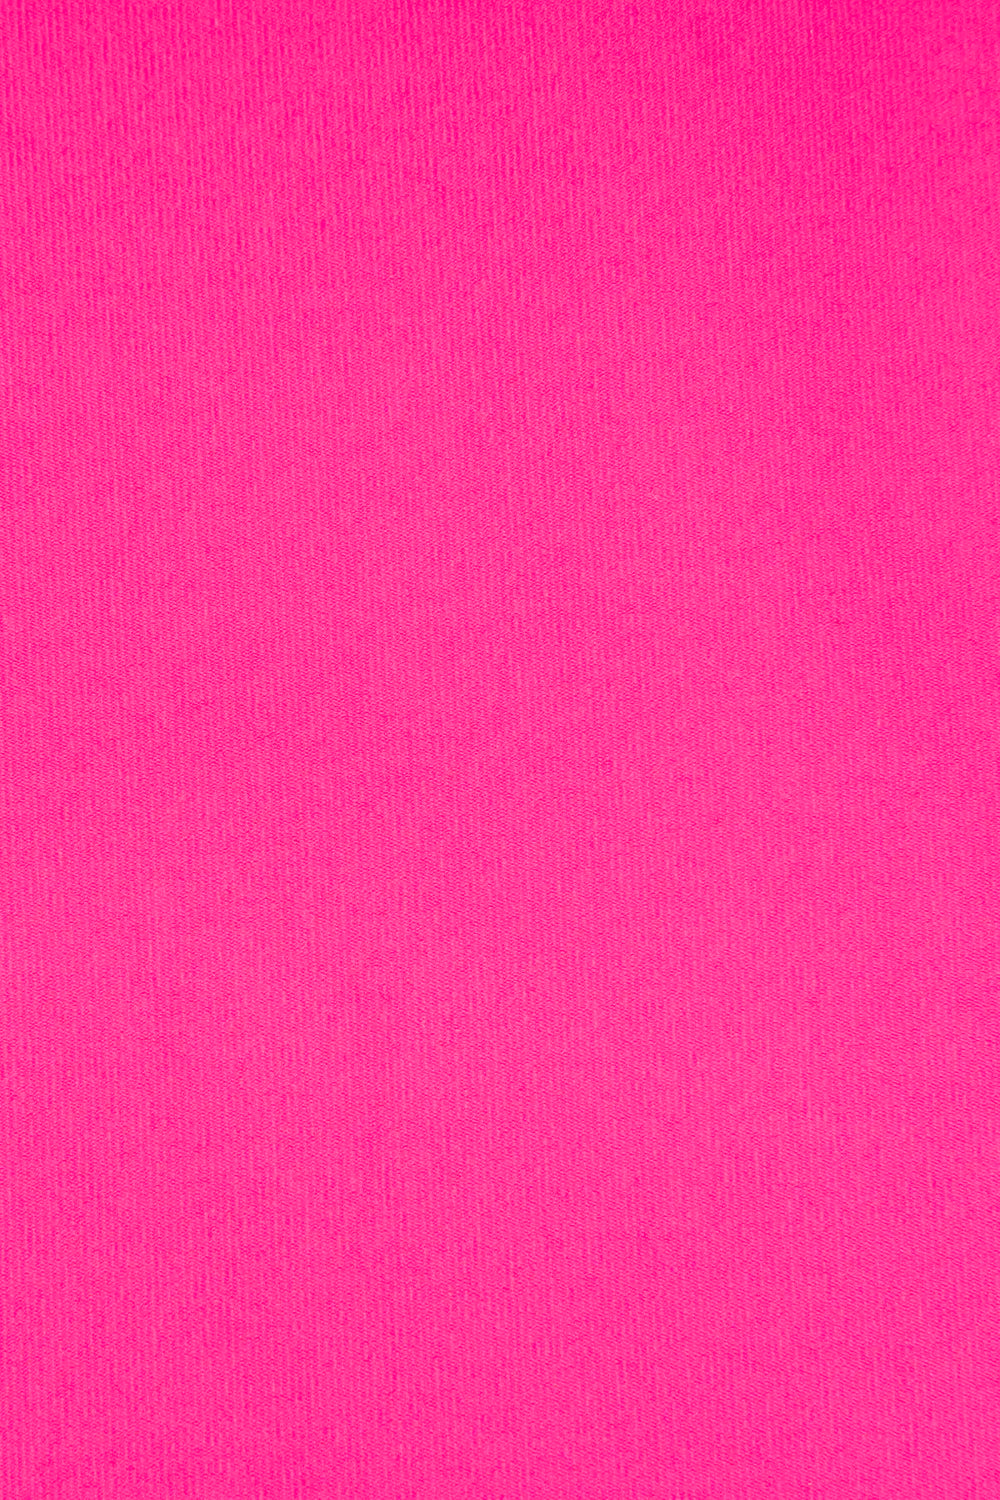 Hot Pink Nylon Spandex Stretch Fabric